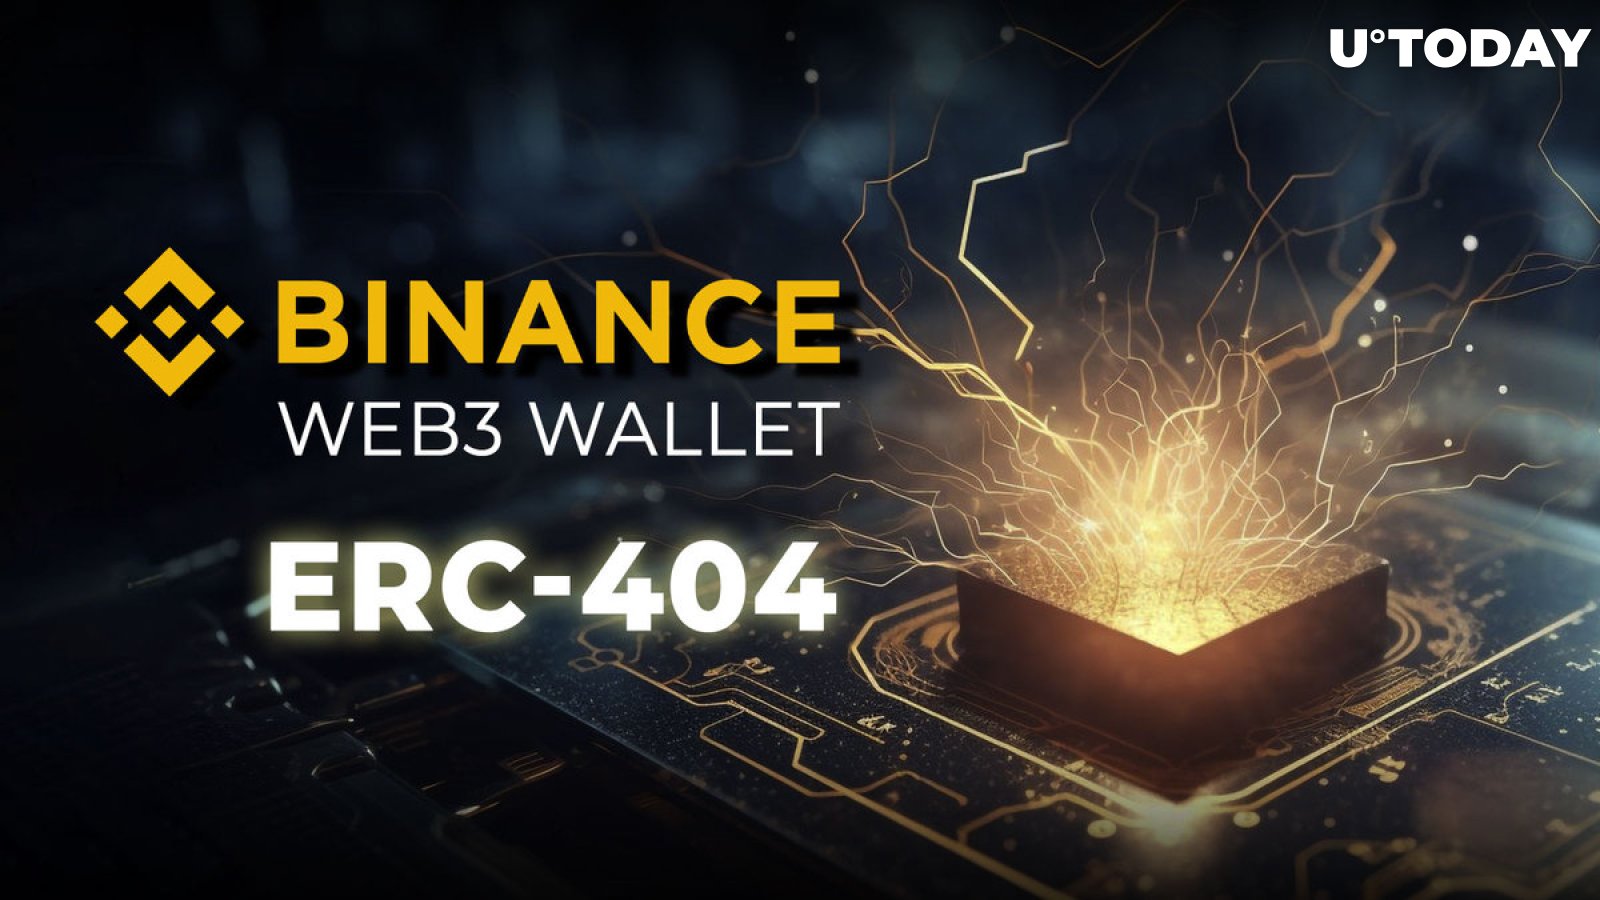 Binance Web3 Wallet ประกาศแจก Crypto ครั้งใหญ่เพื่อเฉลิมฉลองการรวม ERC-404